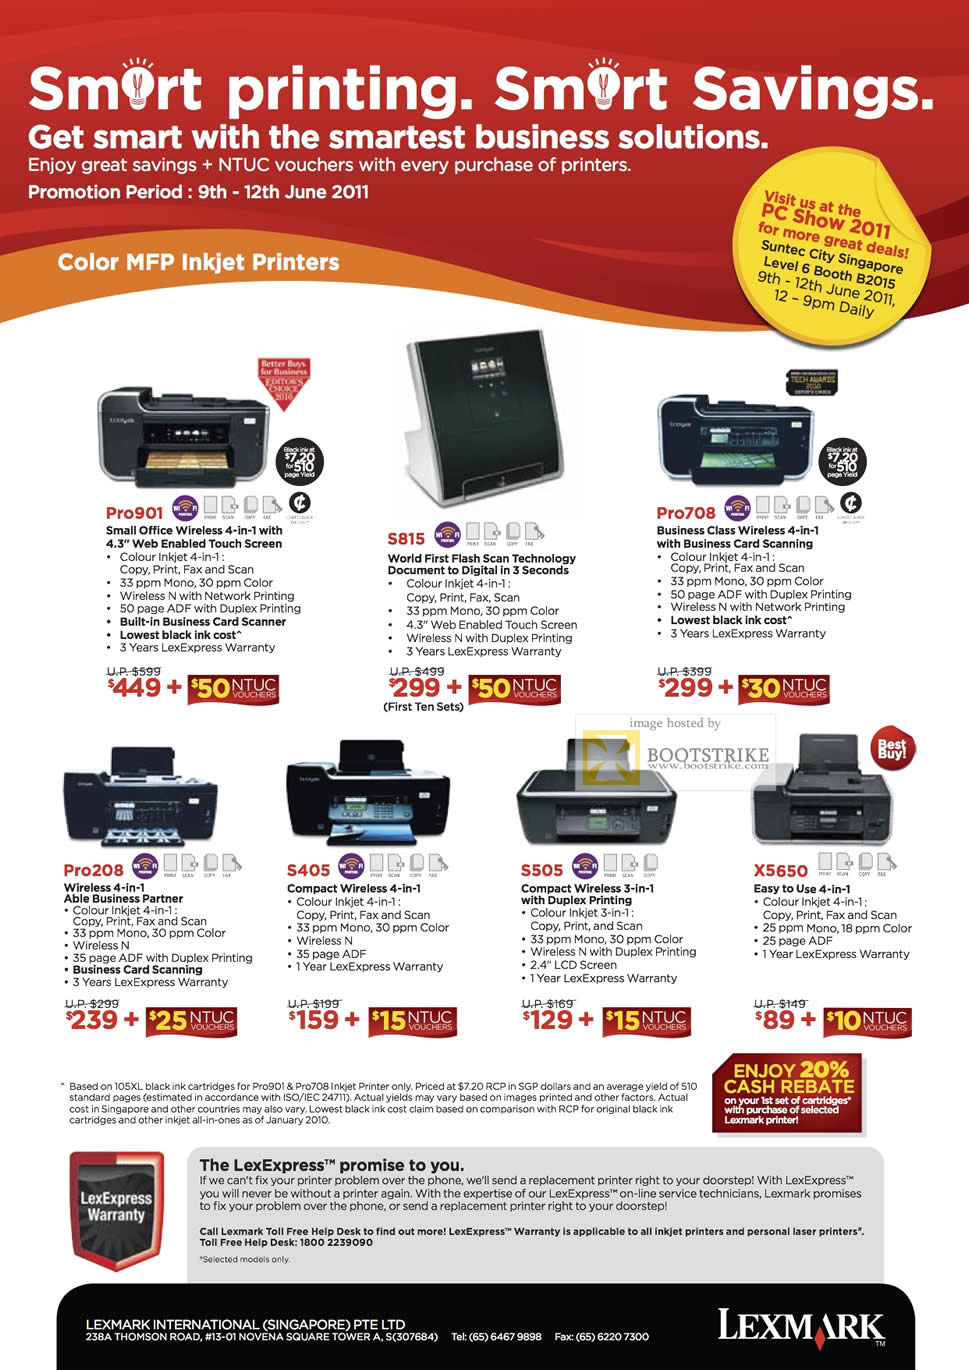 PC Show 2011 price list image brochure of Lexmark Printers Inkjet Pro901 S815 Pro708 Pro208 S405 S505 X5650 Colour Wireless Business Flash Scan